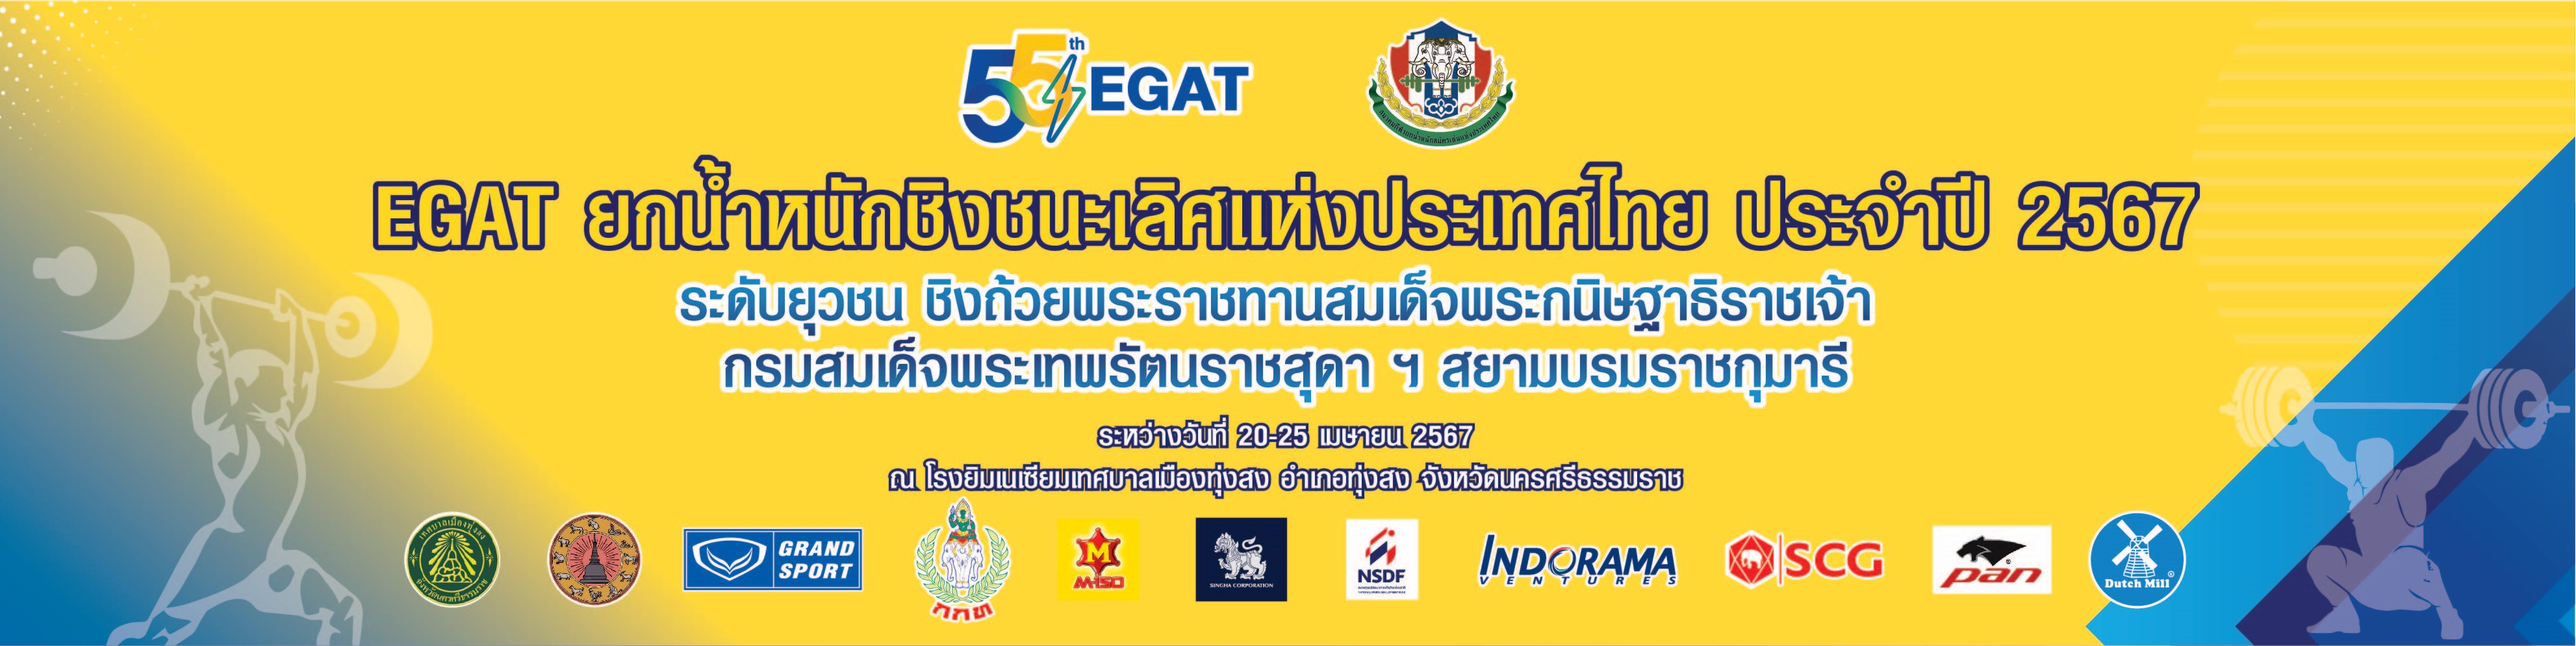 EGAT ยกน้ำหนักชิงชนะเลิศแห่งประเทศไทย ประจำปี 2567 ระดับยุวชน ชิงถ้วยพระราชทานสมเด็จพรกนิษฐาธิราชเจ้า กรมสมเด็จพระเทพรัตนราชสุดาฯ สยามบรมราชกุมารี